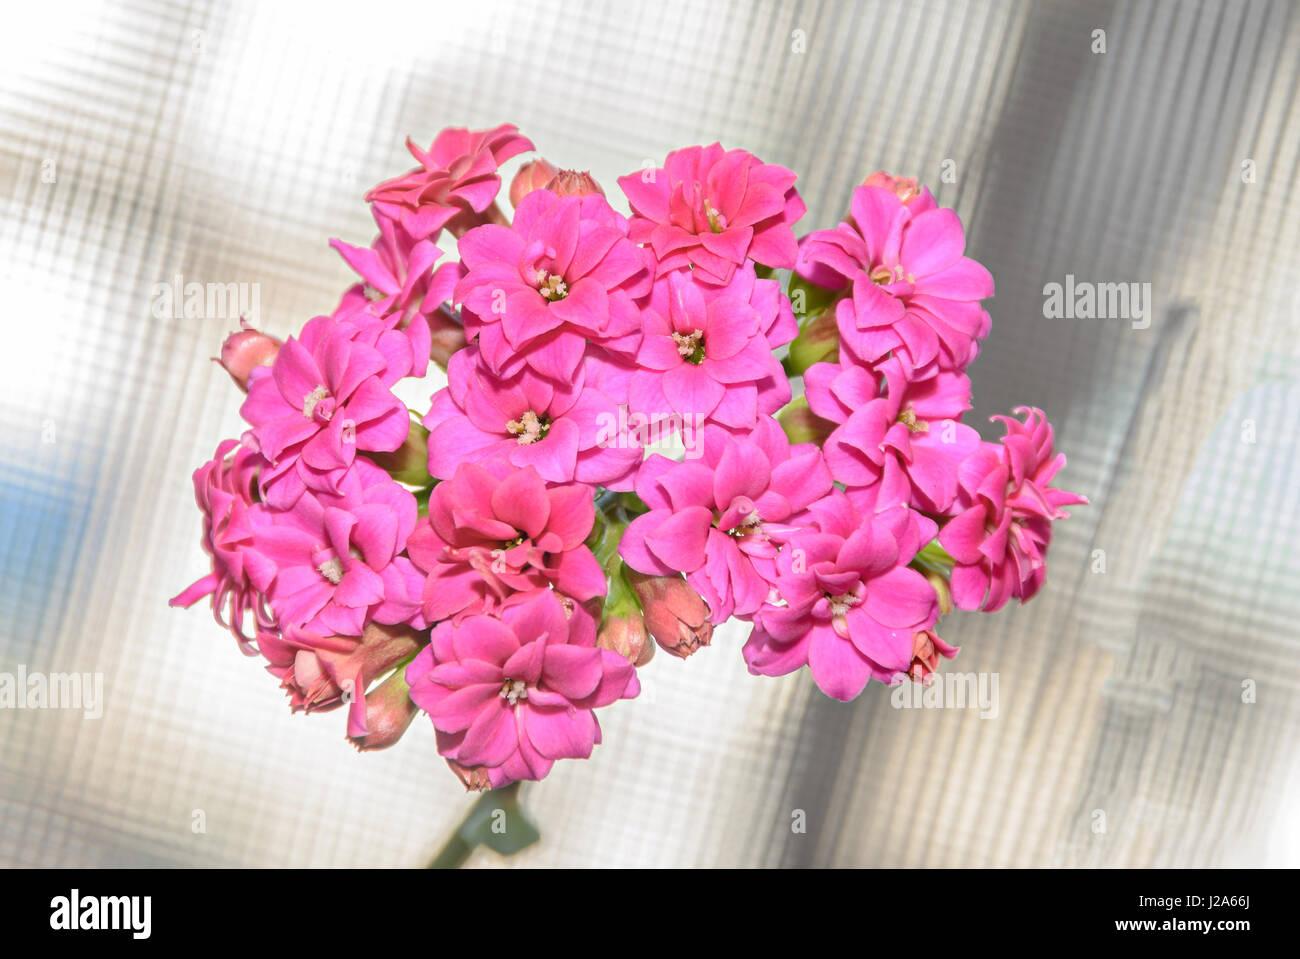 Pink Calandiva flowers, Kalanchoe, family Crassulaceae, close up,  bokeh gradient background. Stock Photo